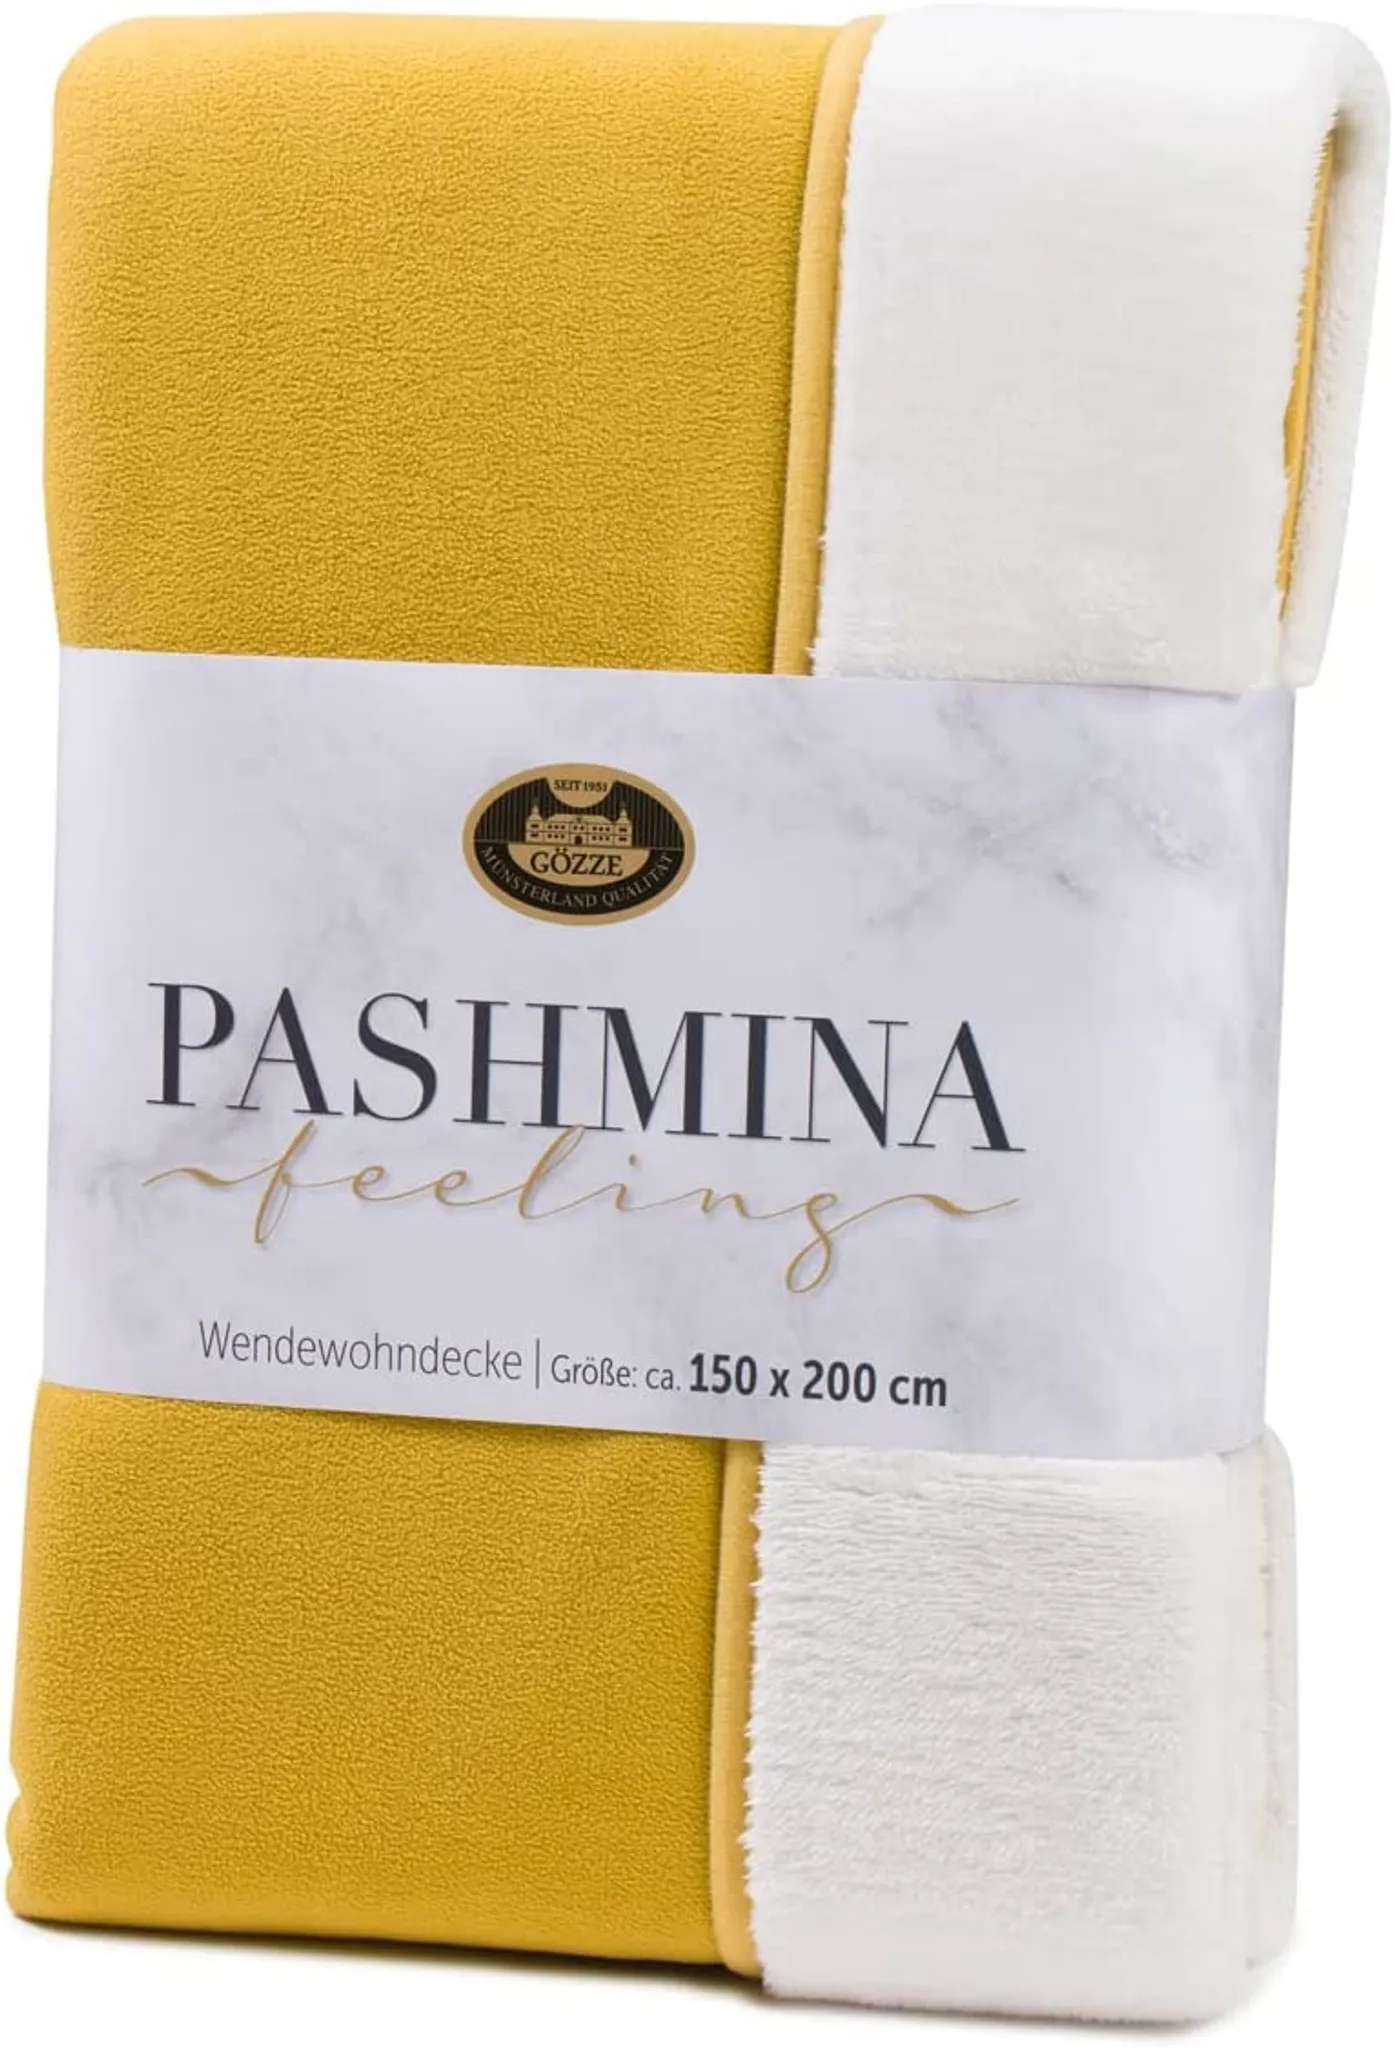 Gözze Wendewohndecke uni Pashmina-Feeling 150